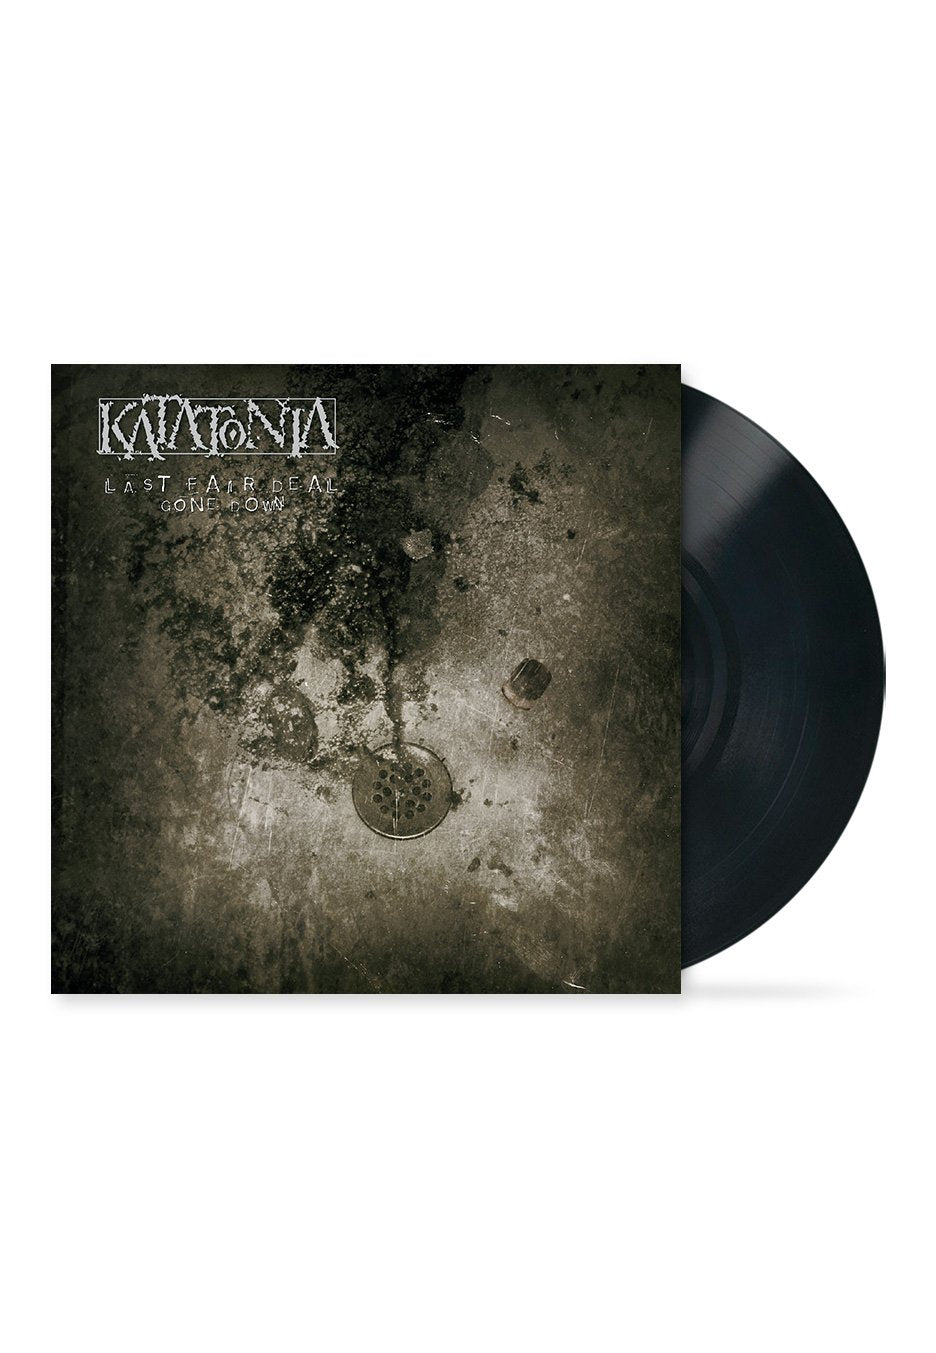 Katatonia - Last Fair Deal Gone Down - Vinyl